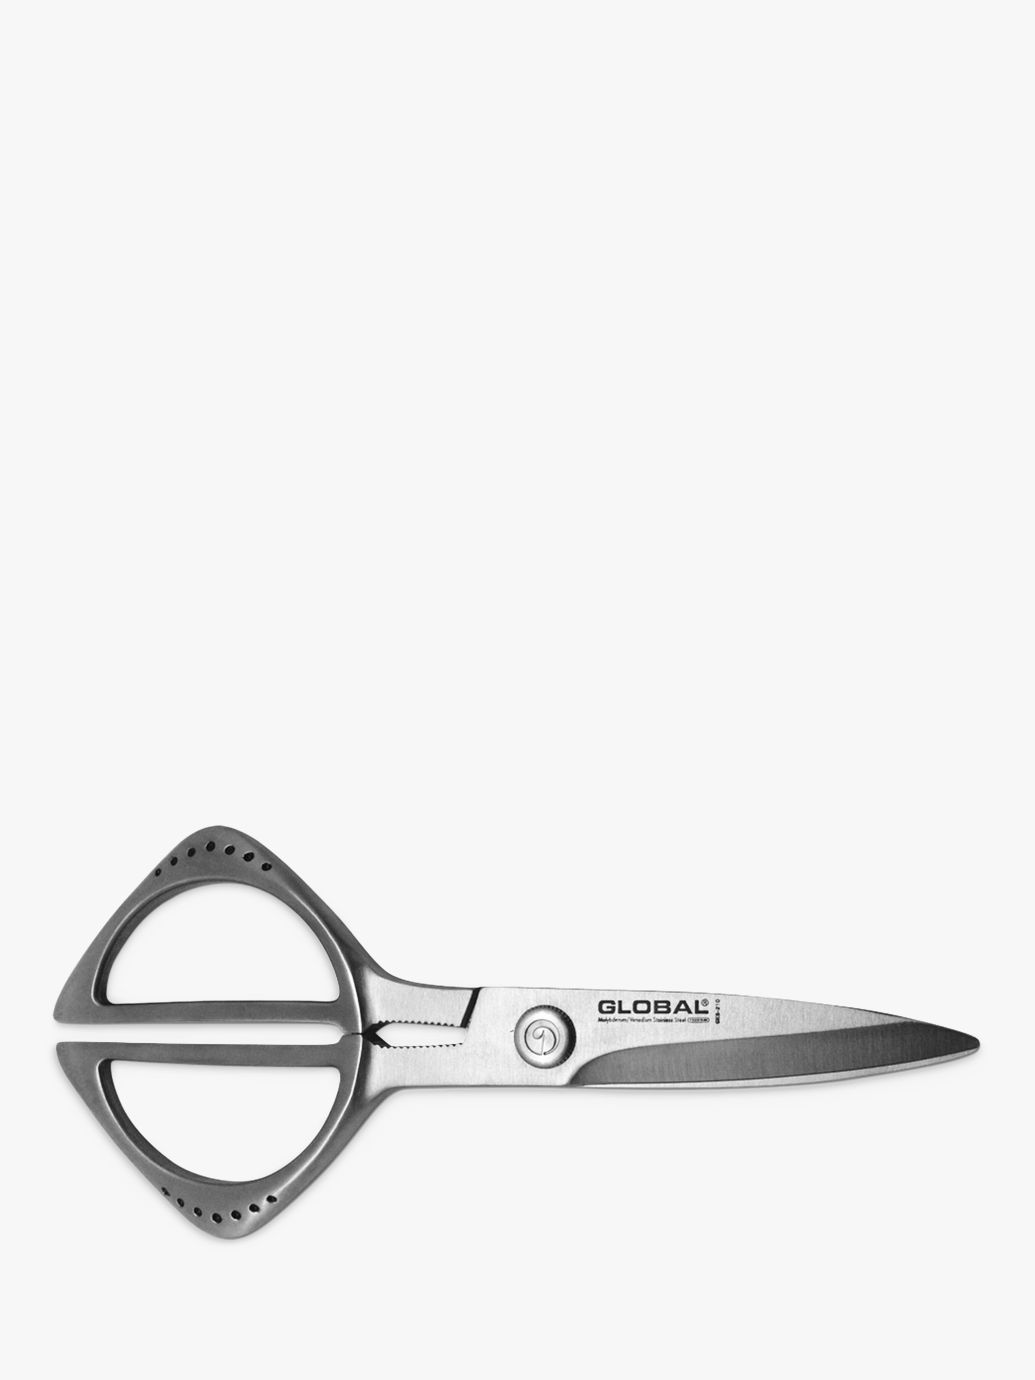 GKS-210 Kitchen Shear 21cm – Global® Knives Singapore